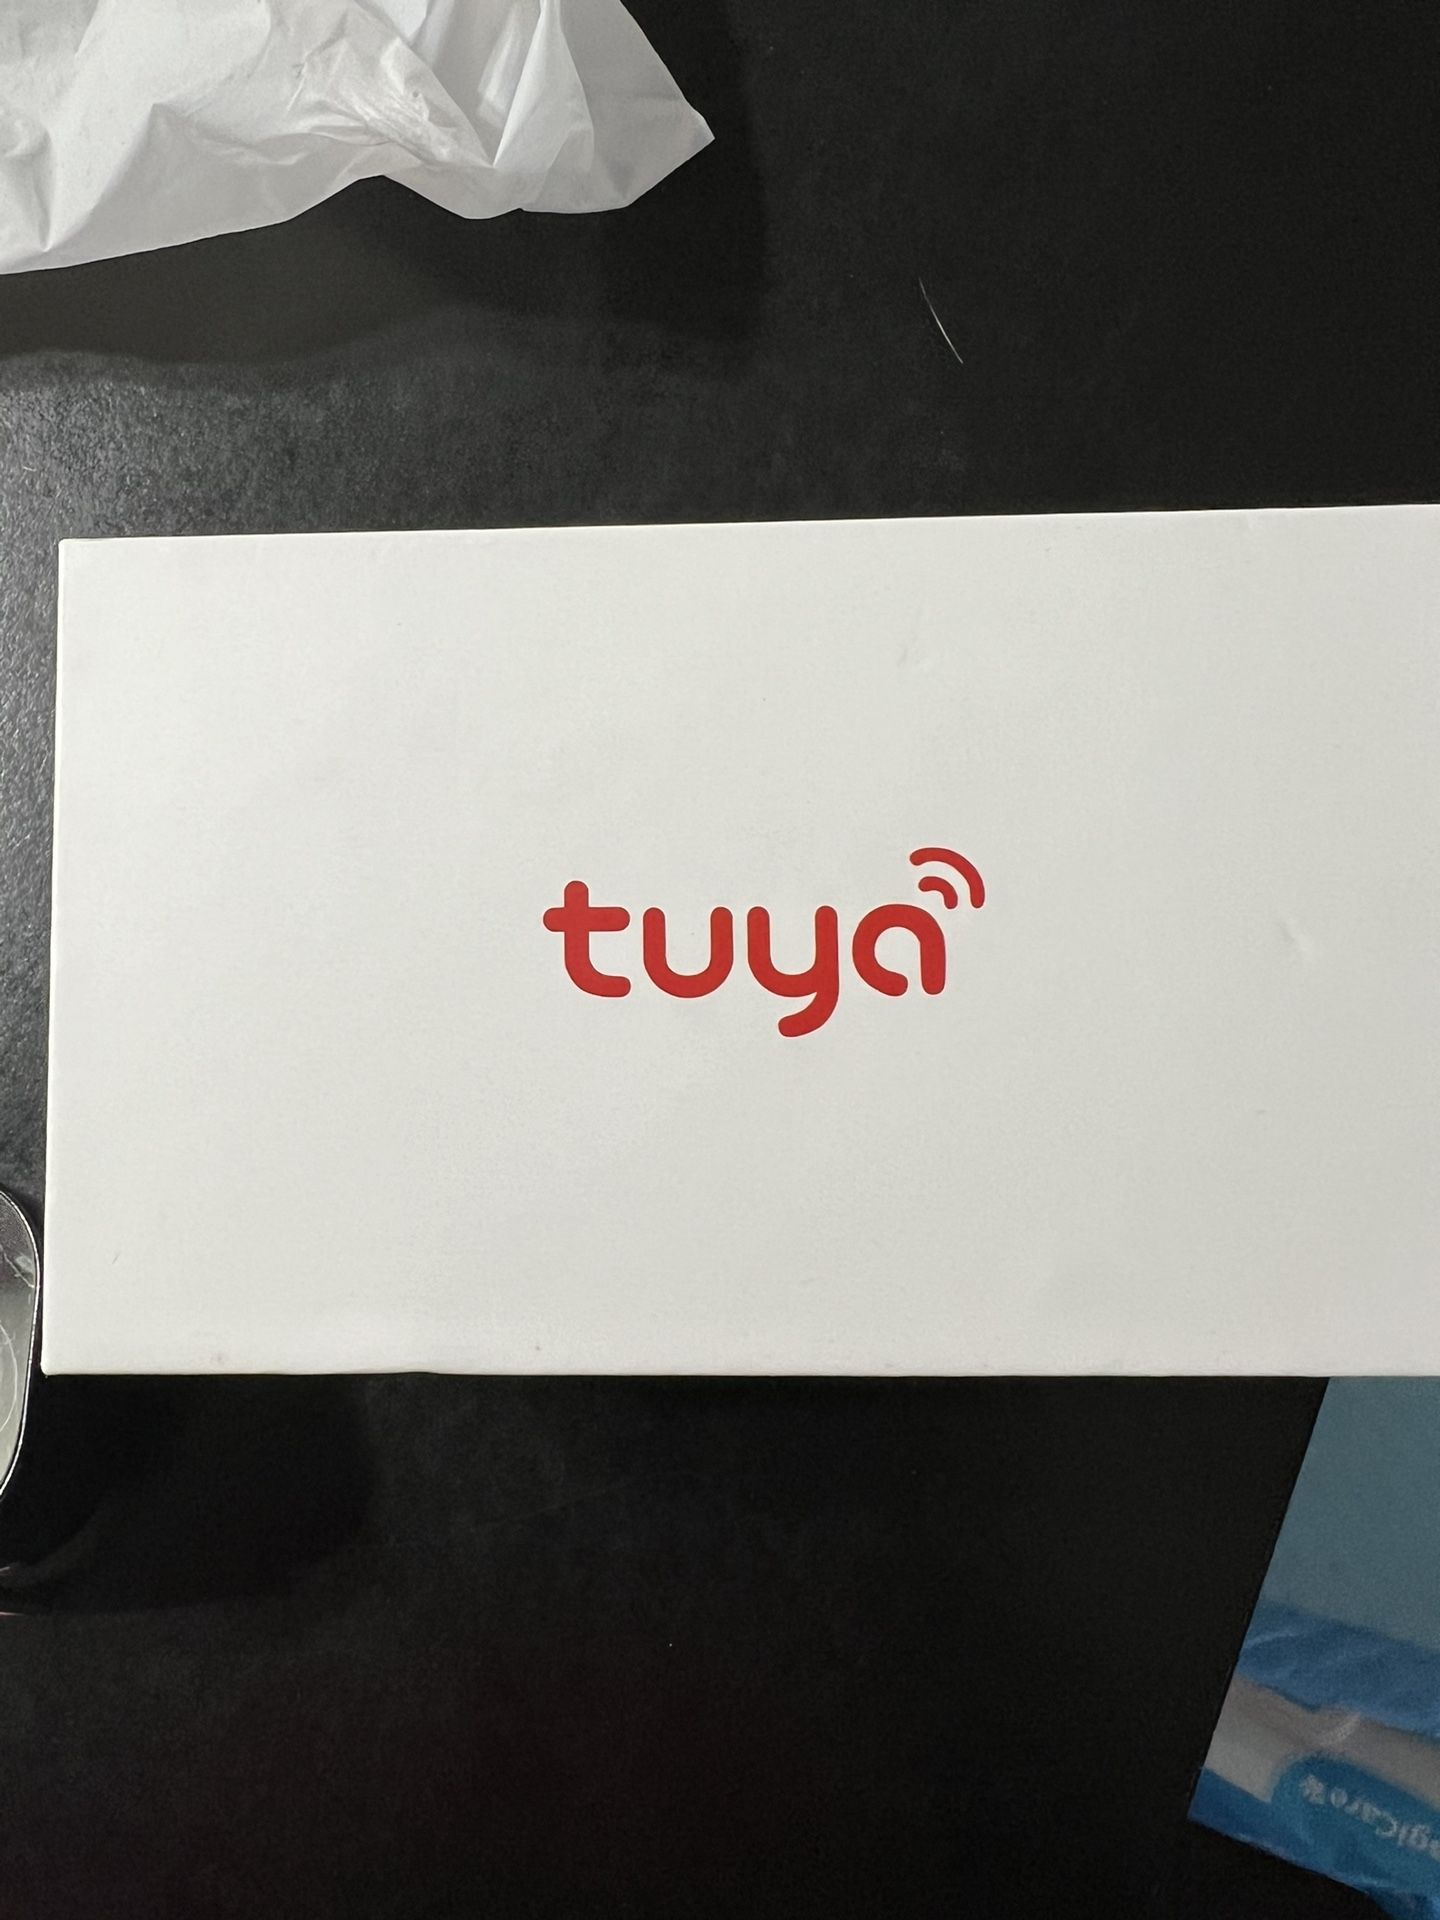 Tuya Clock With Built-in WIFI camera